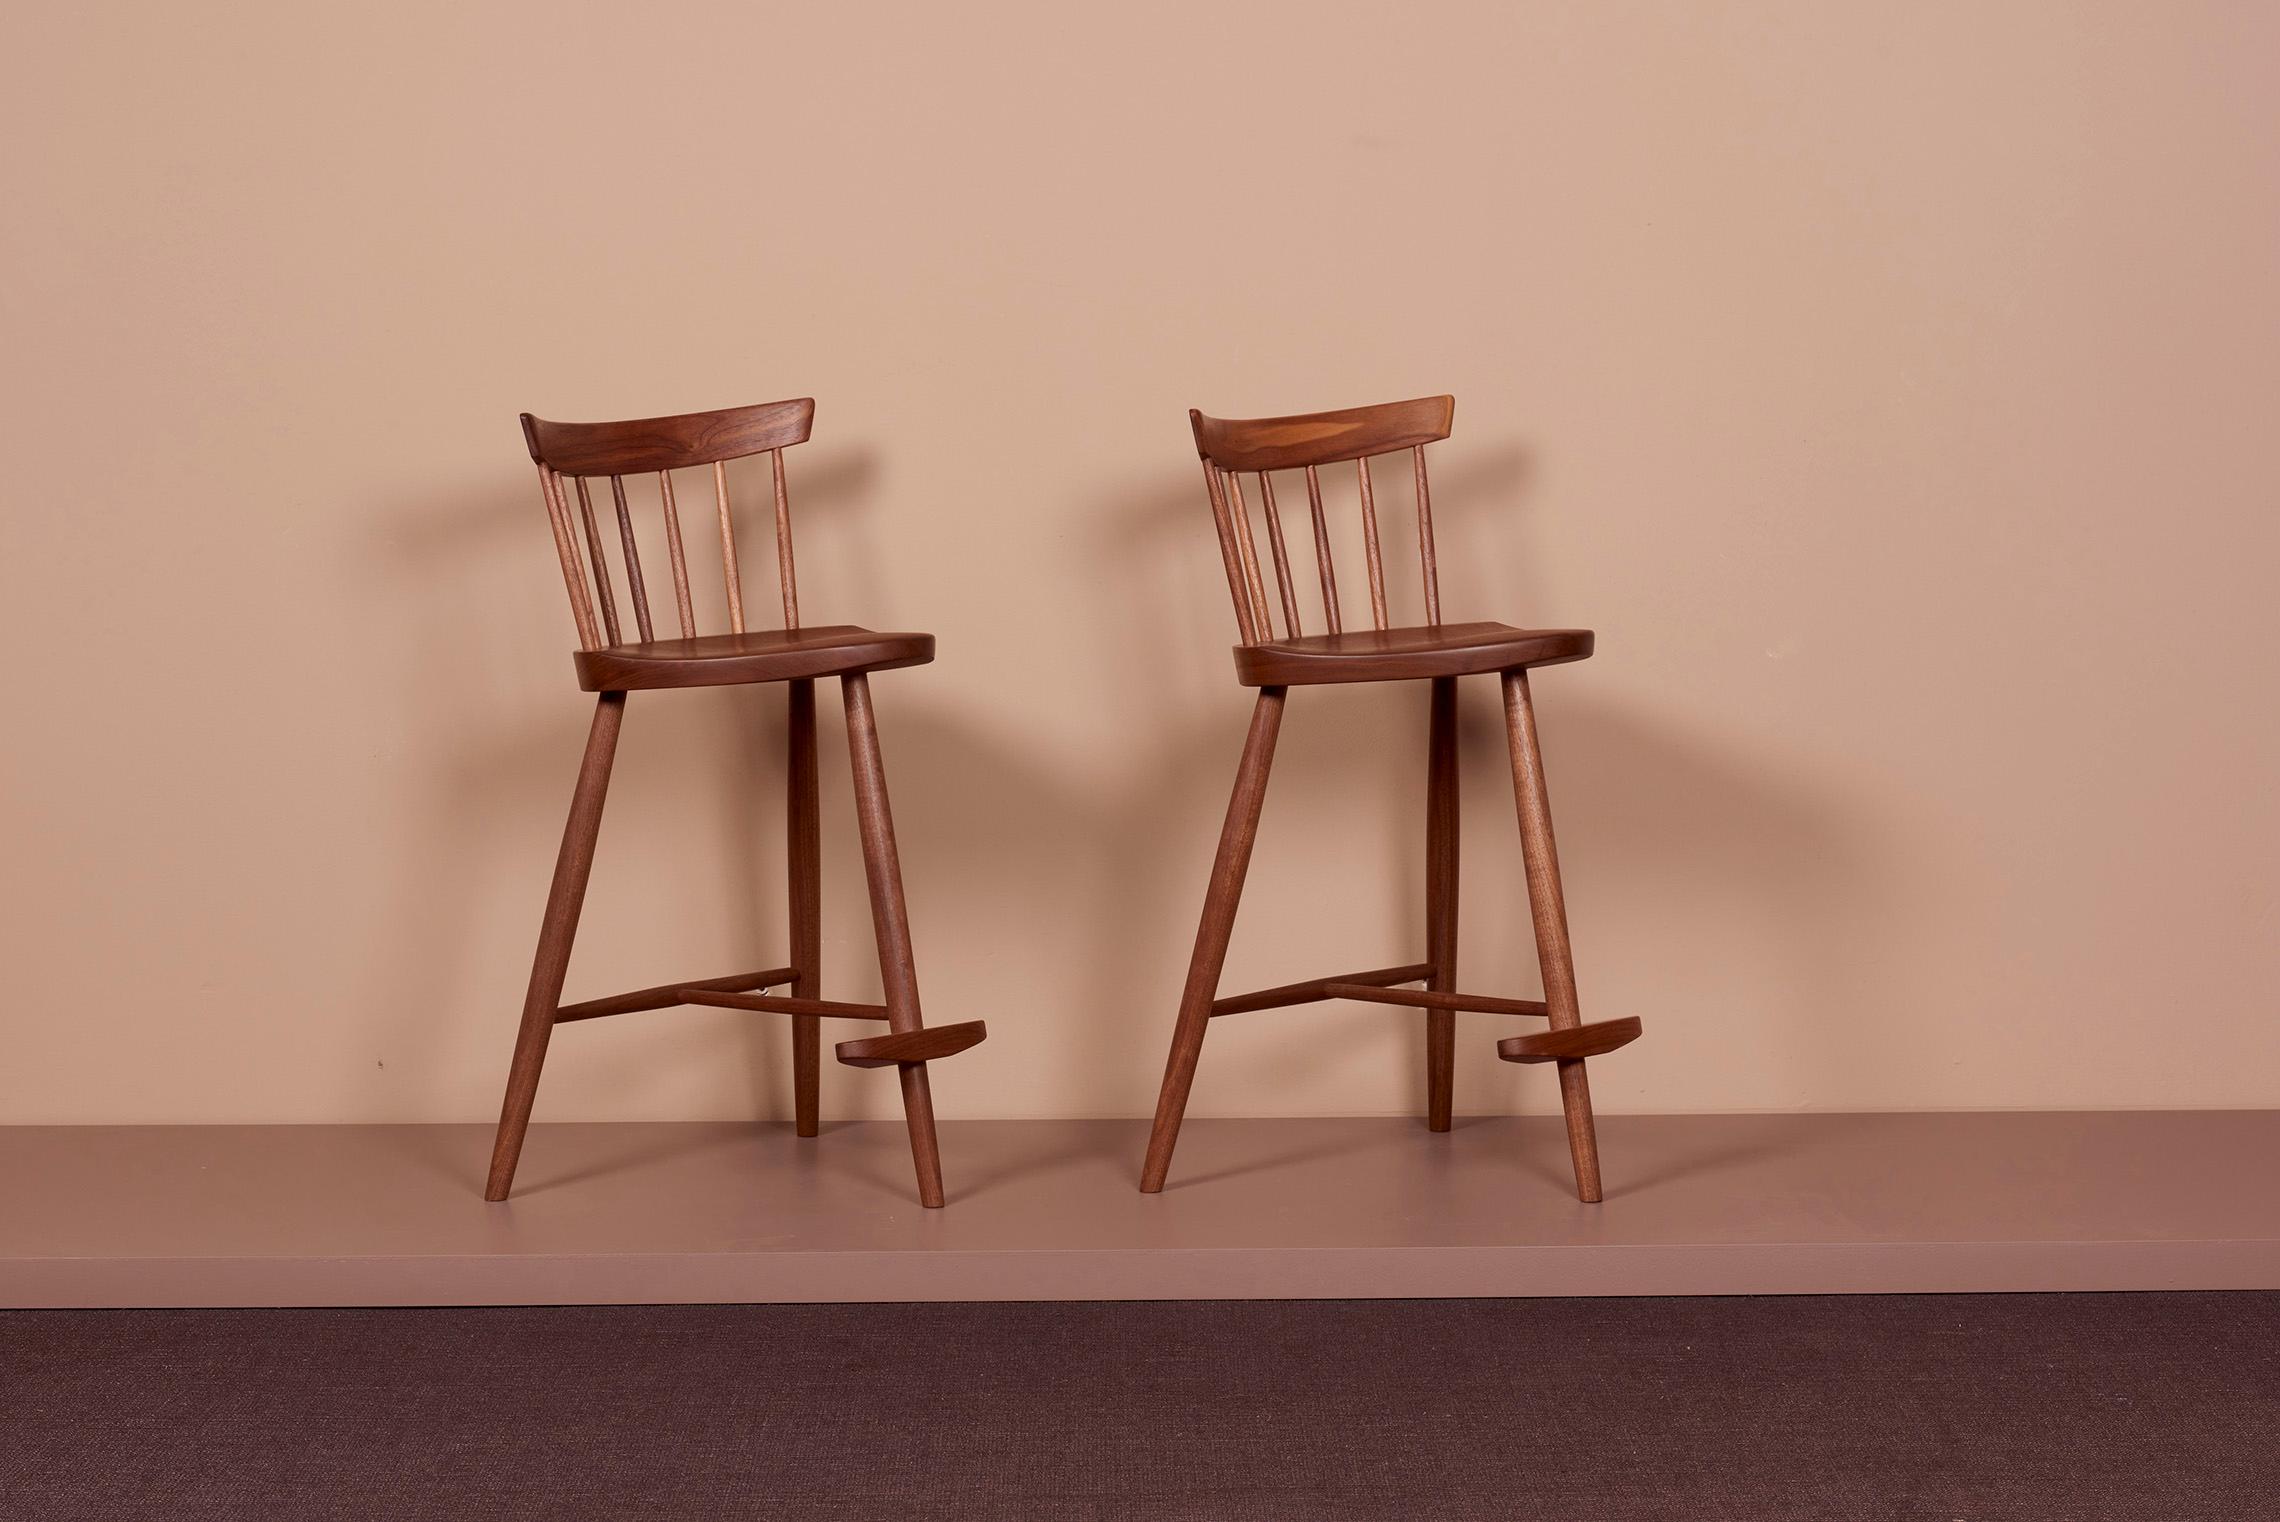 Pair of Nakashima Studio Mira Nakashima Mira bar stools in walnut, US 2021
The chairs are in black walnut and signed.
 